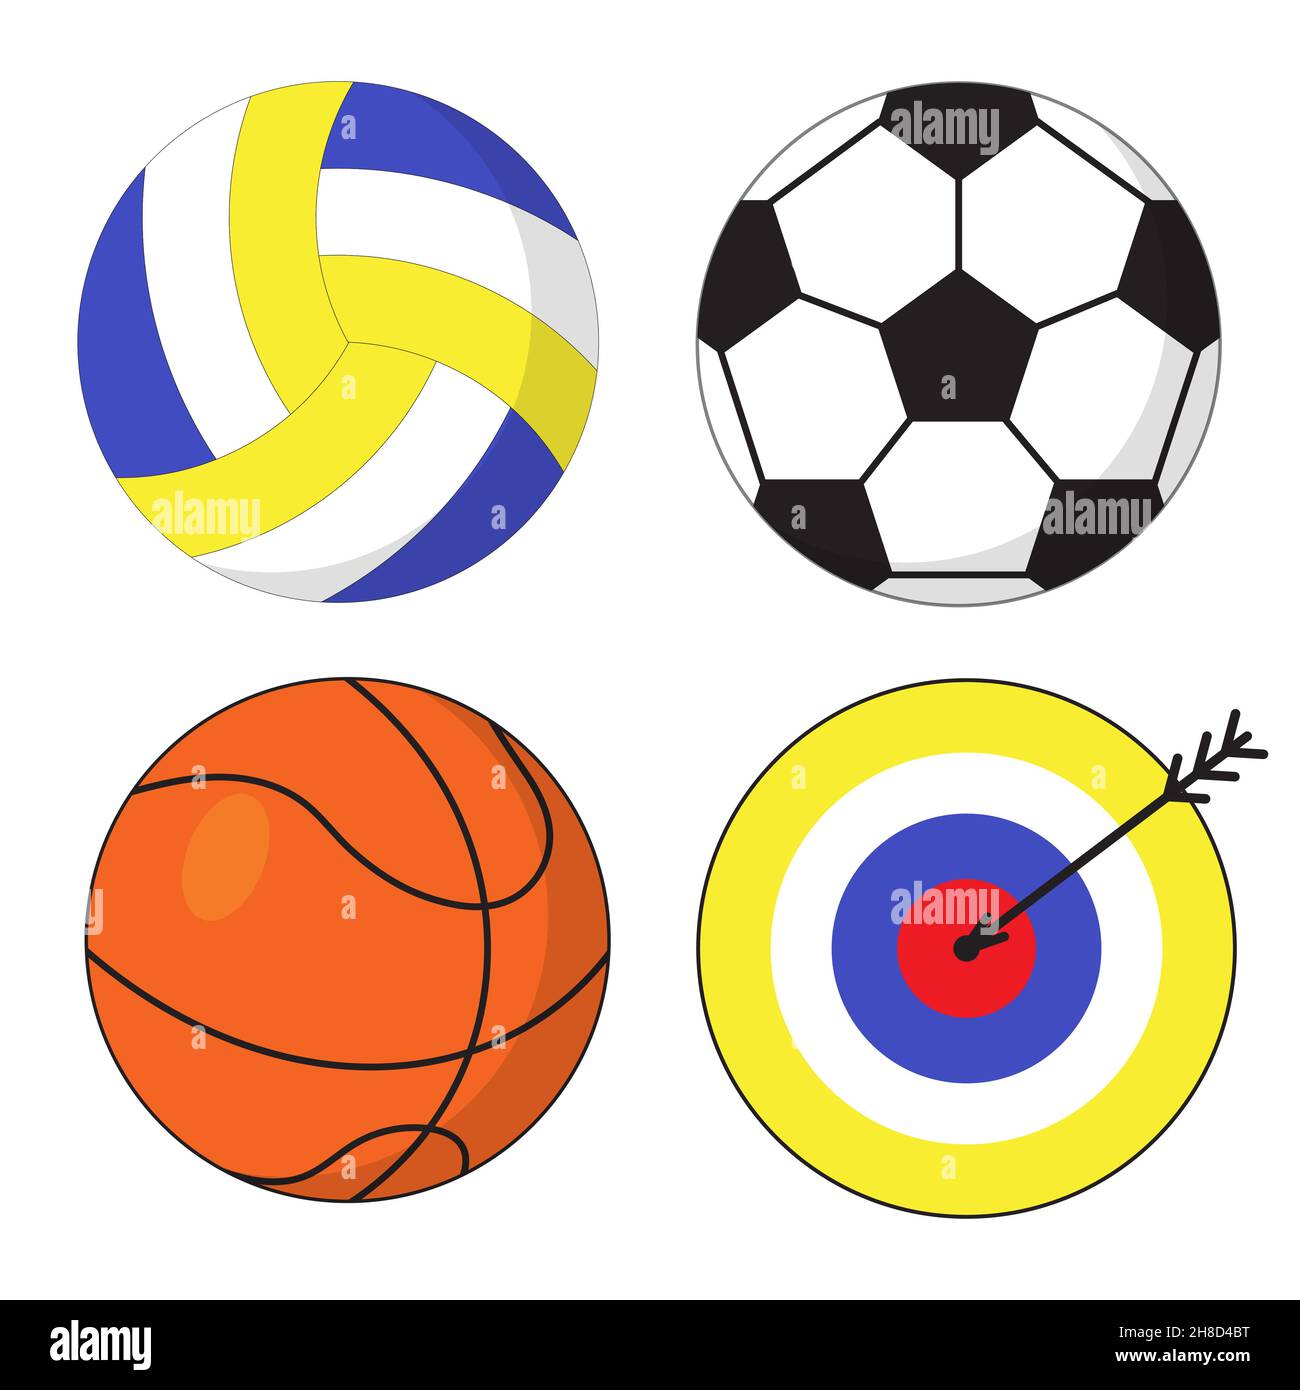 Pelota Voleibol Dibujada Mano Concepto Deporte Amor Ilustración